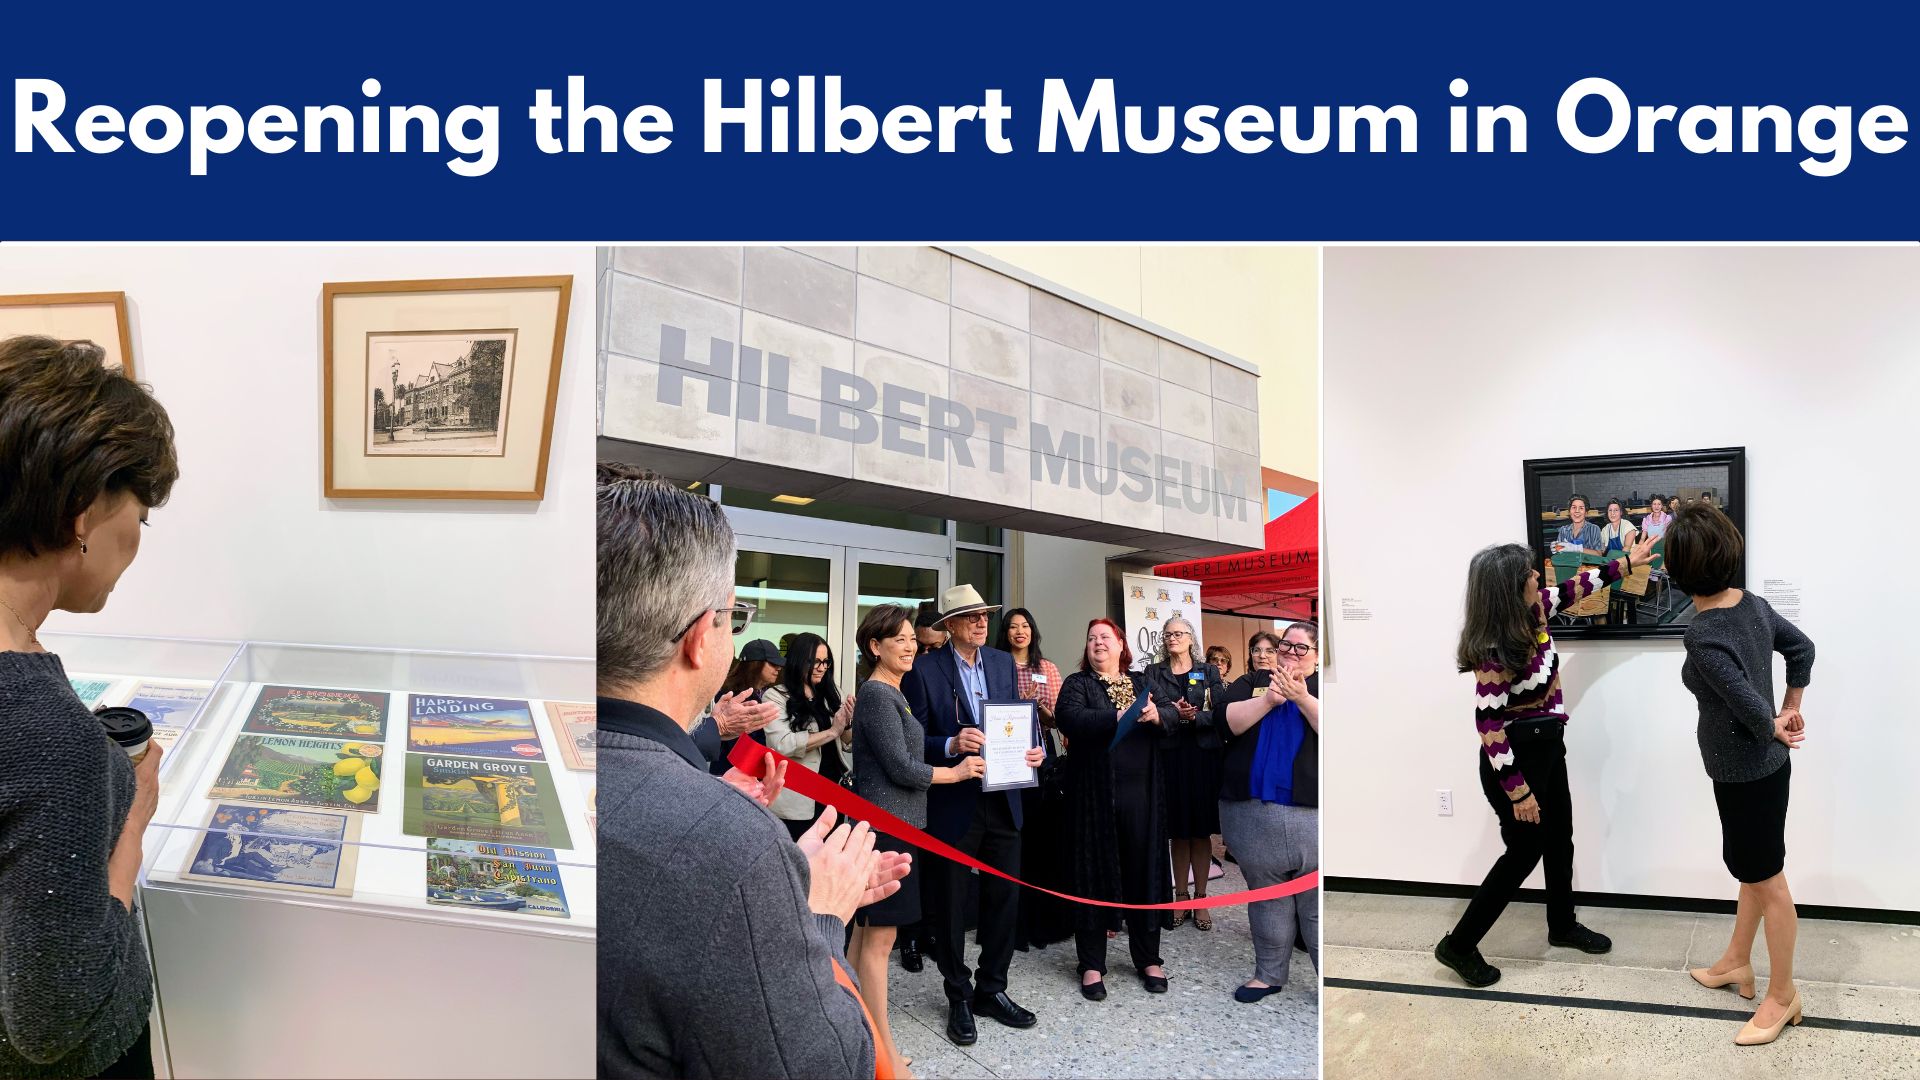 Hilbert Museum